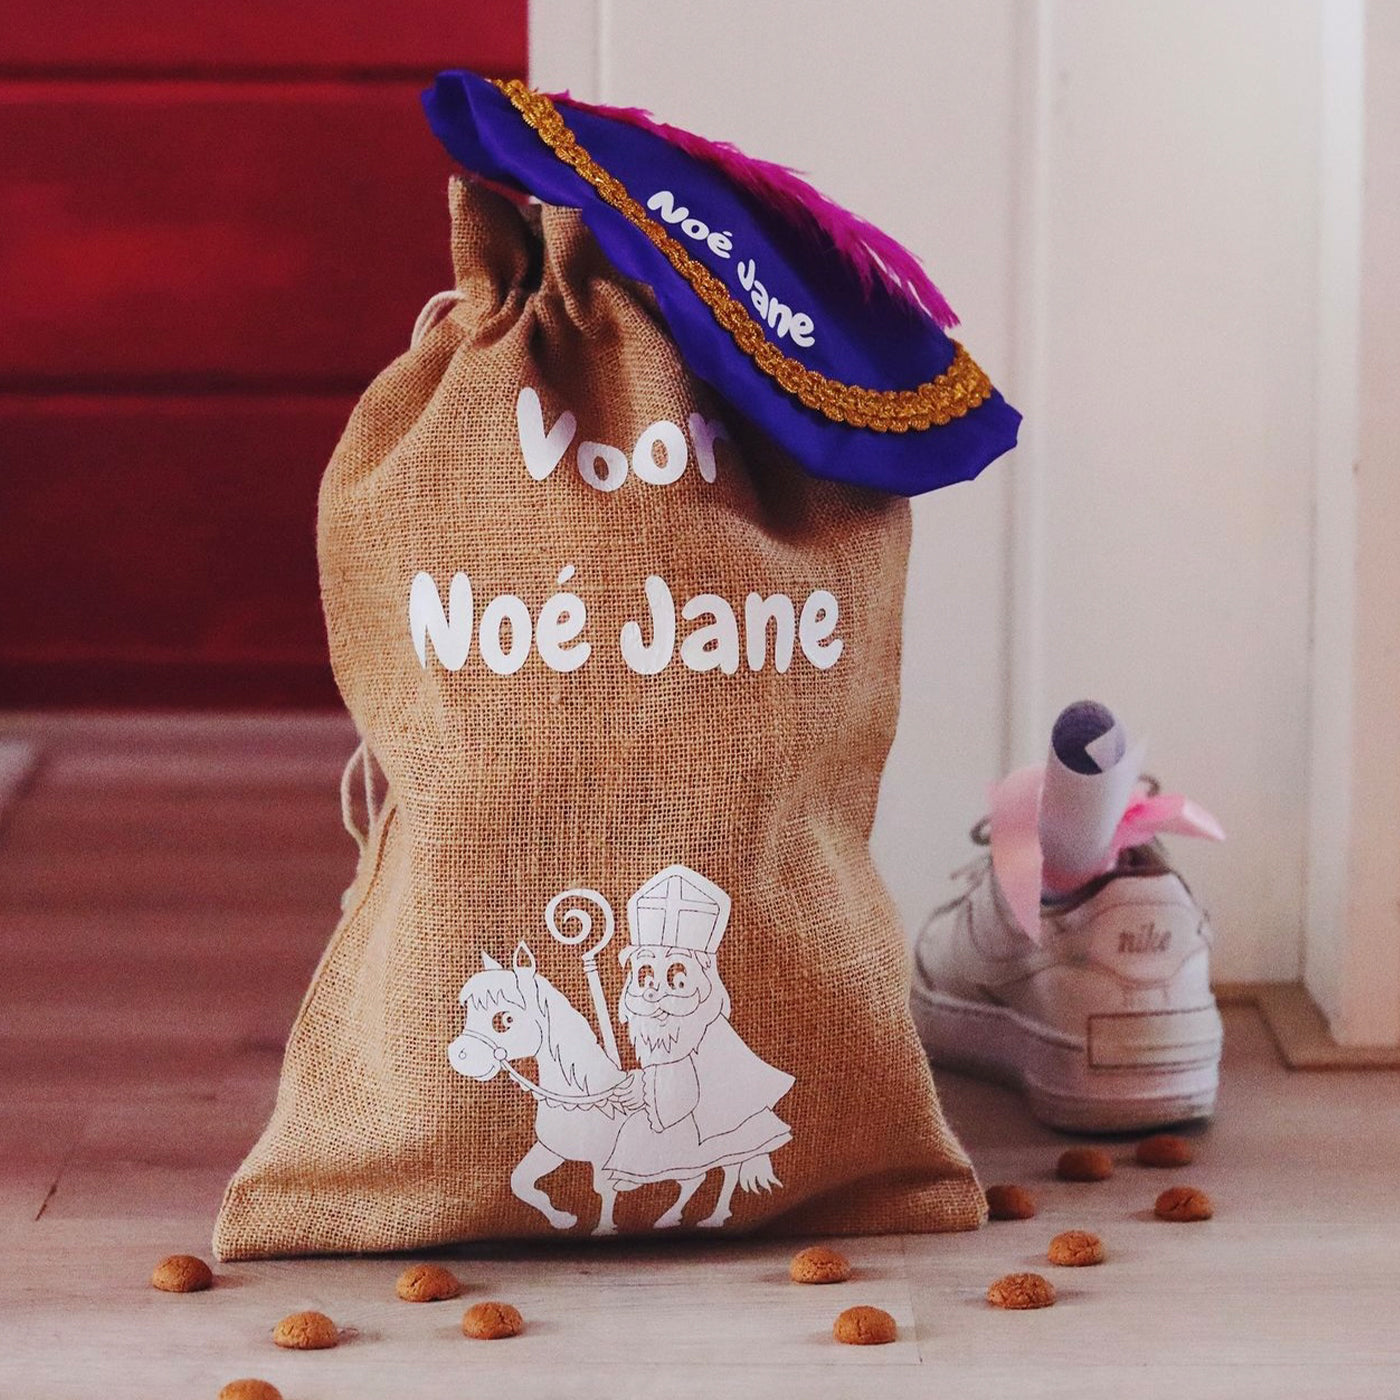 Jute bag with name